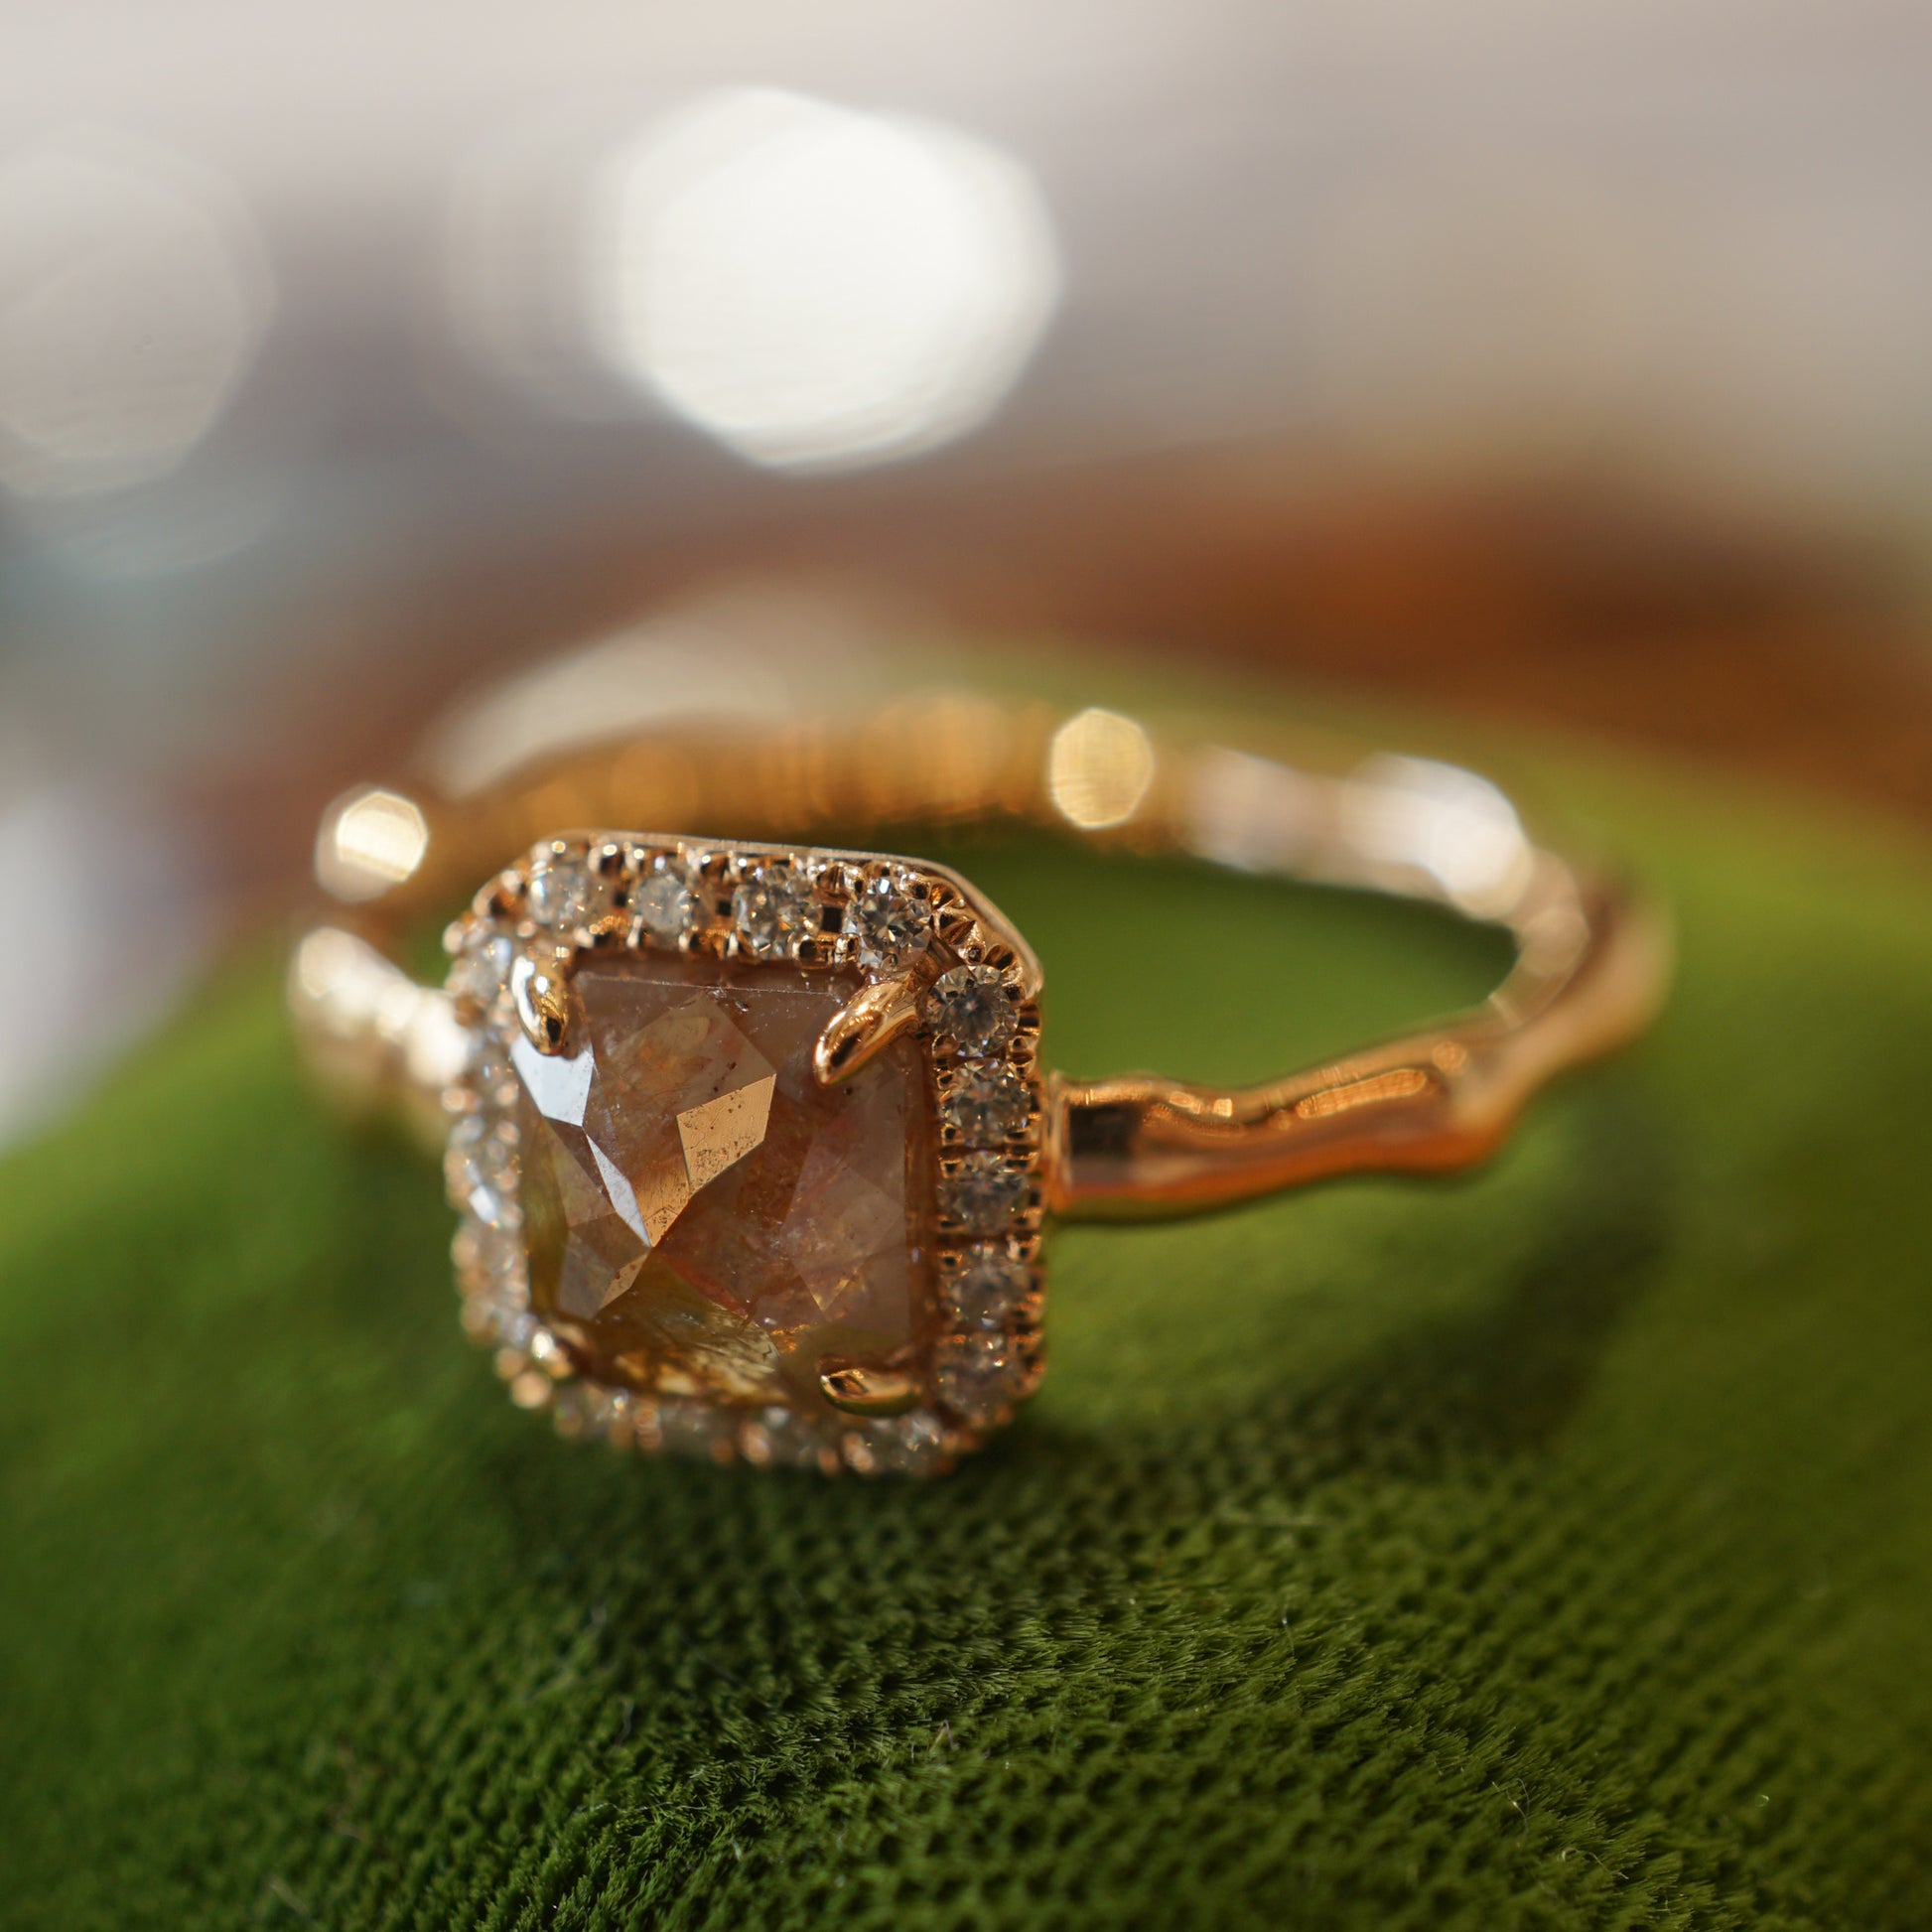 Rustic Cognac Diamond Engagement Ring in 18K Rose Gold